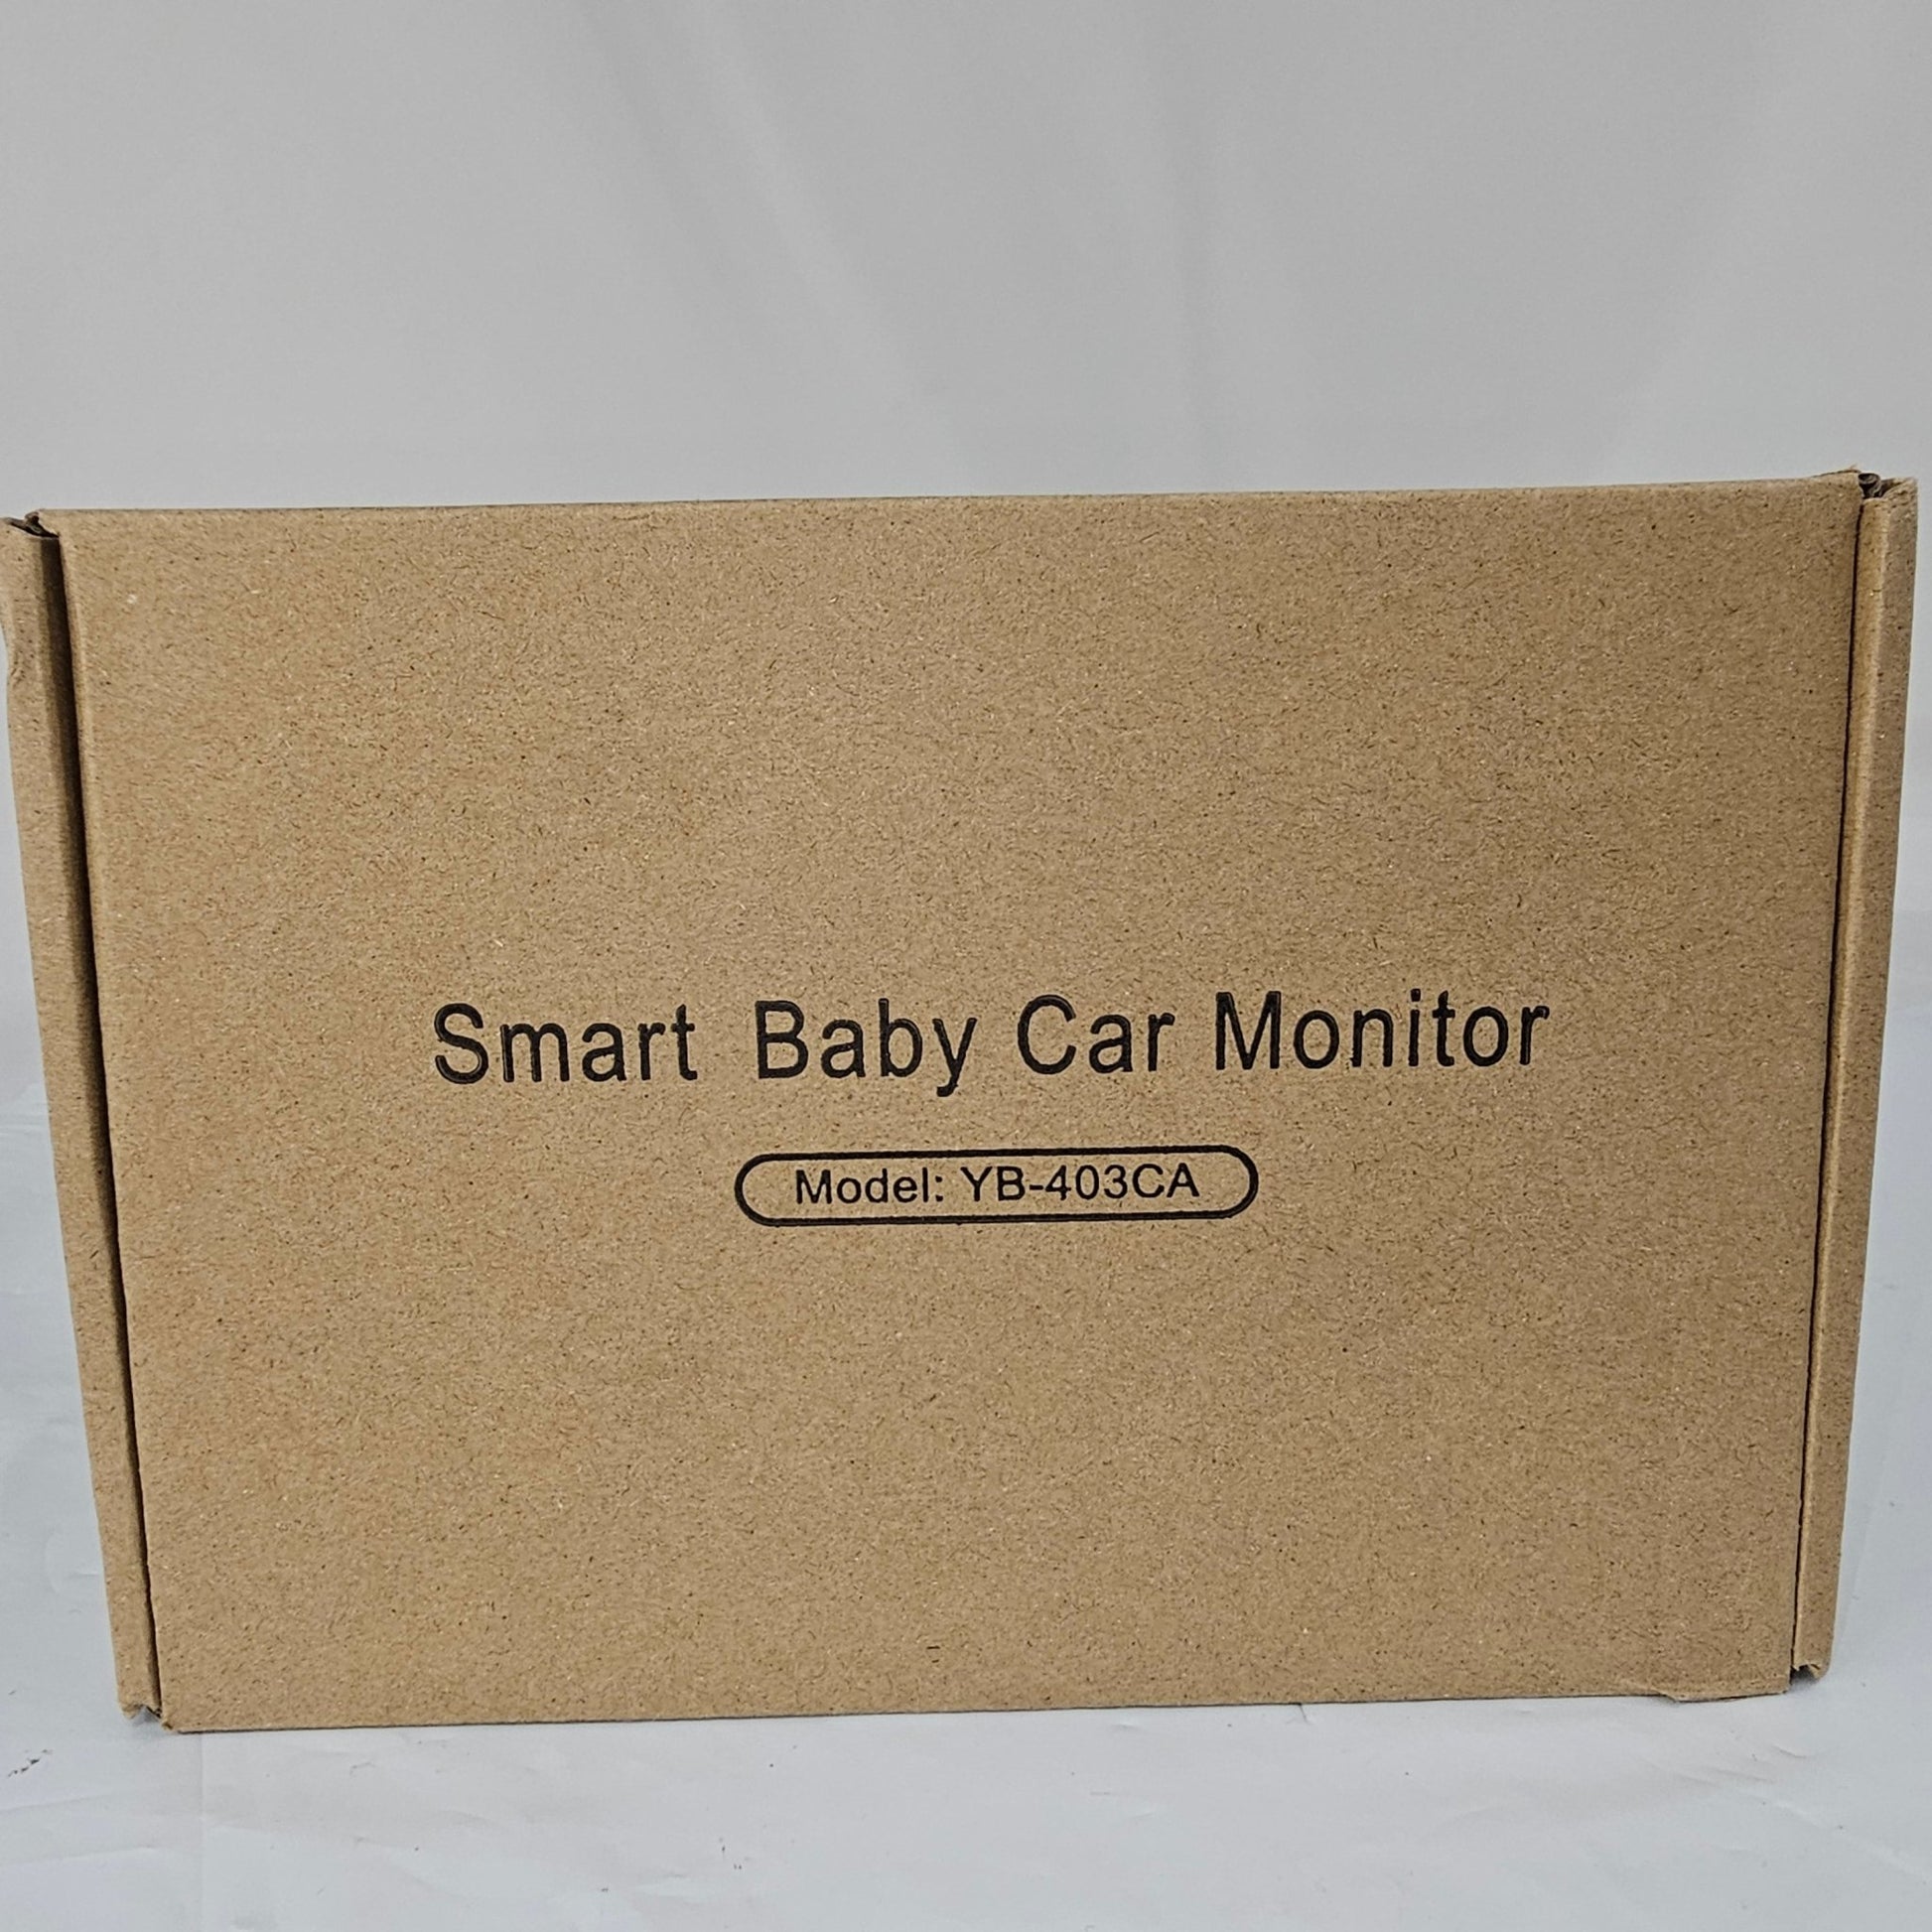 Smart Baby Car Monitor YB-403CA - DQ Distribution